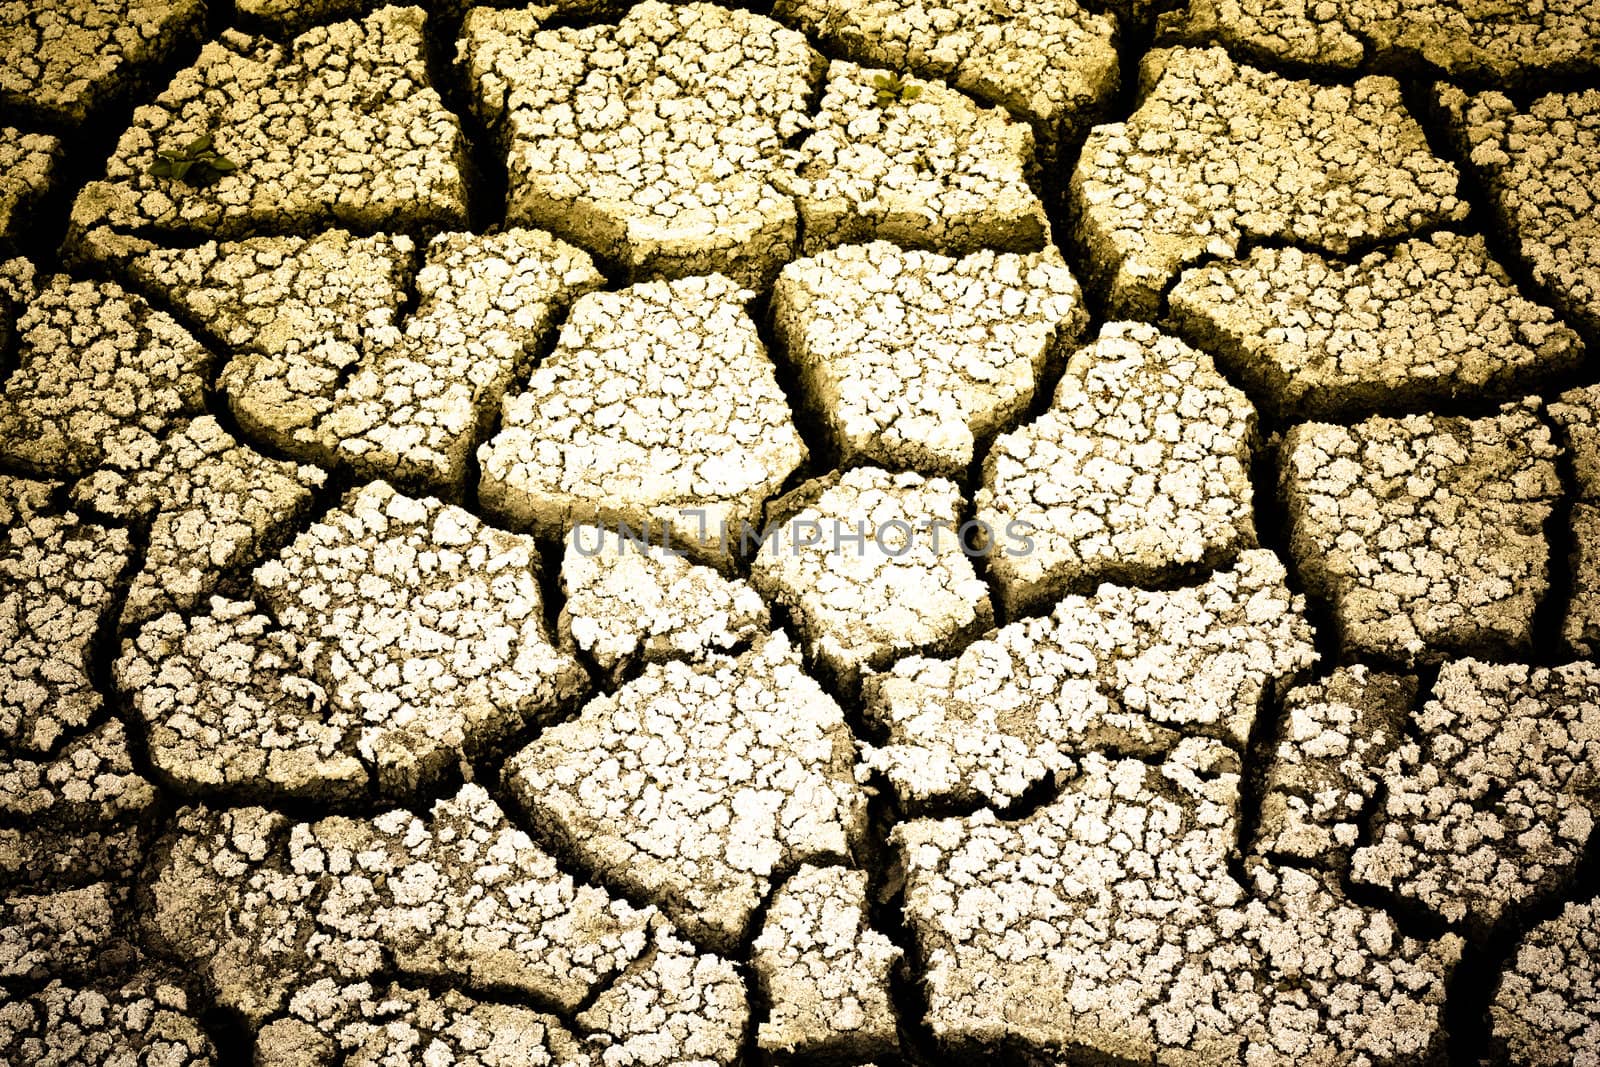 dry ground with cracks